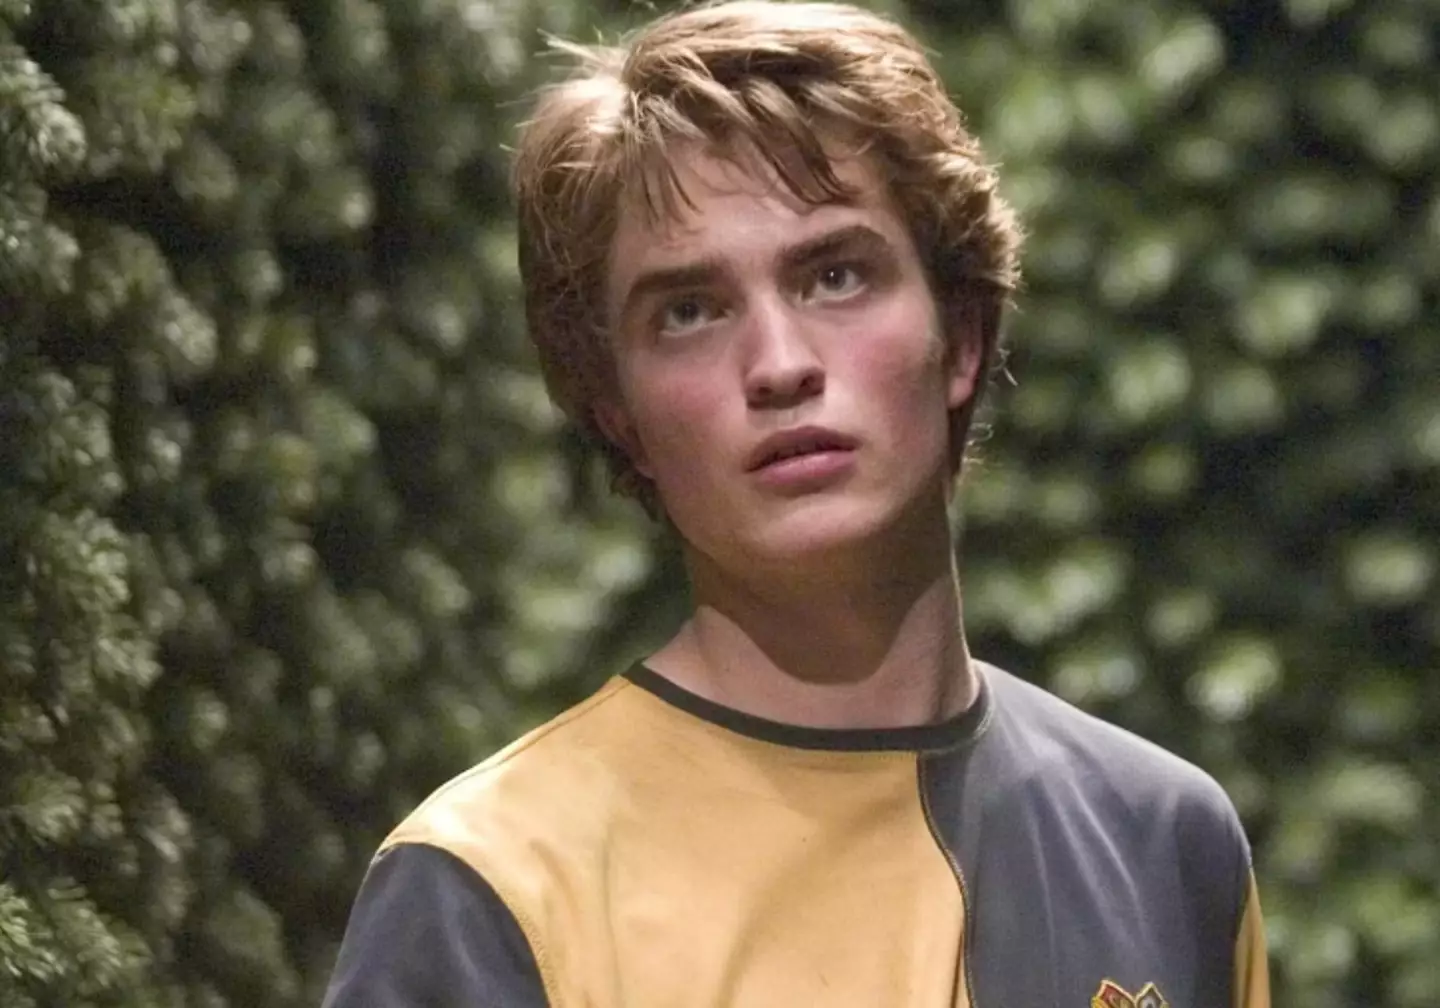 Ceddric Diggory is one of Robert Pattinson's earlier recognisable roles. (Warner Bros.)